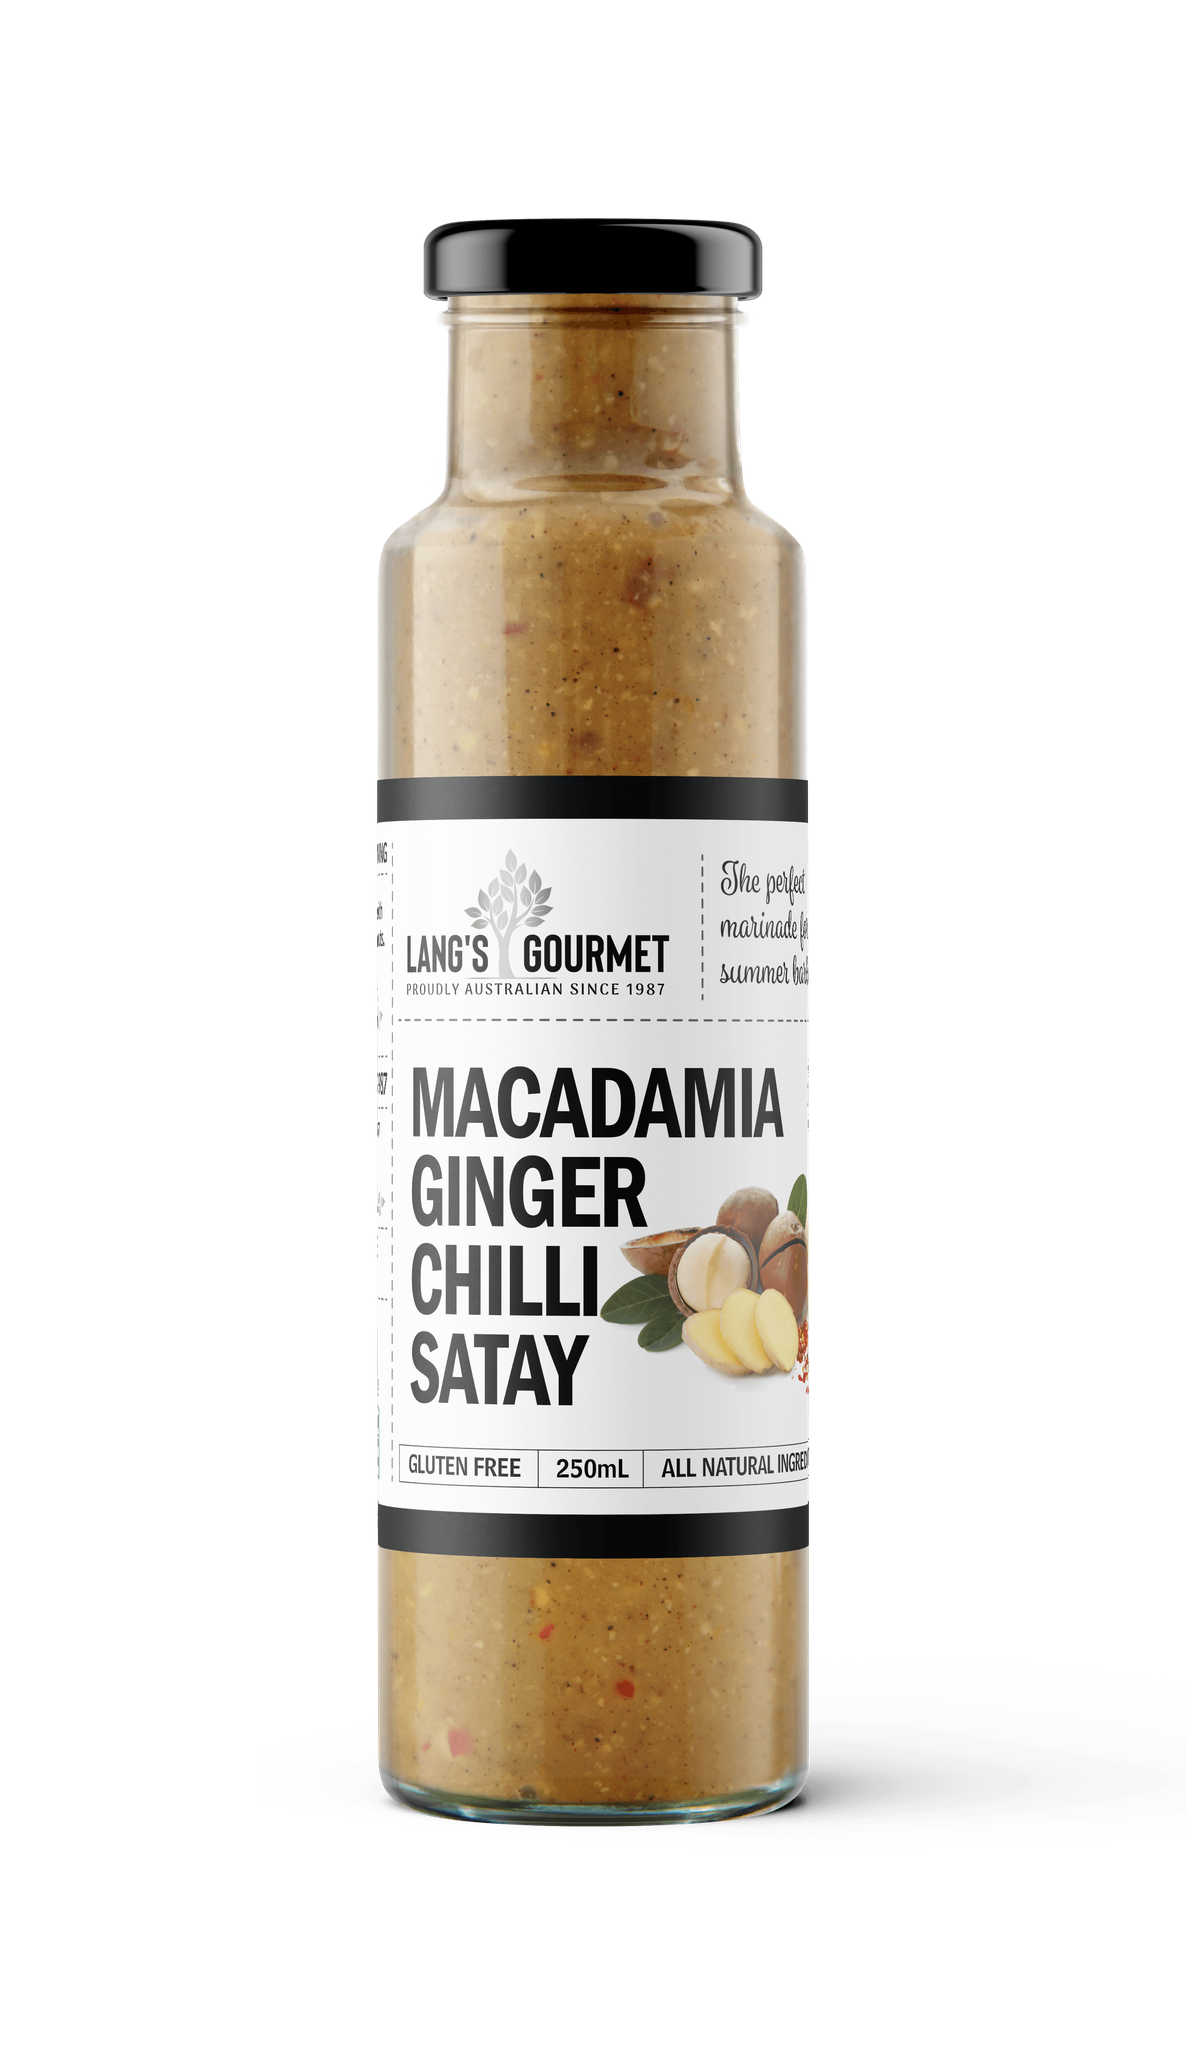 Lang's Gourmet Macadamia Ginger Chilli Satay